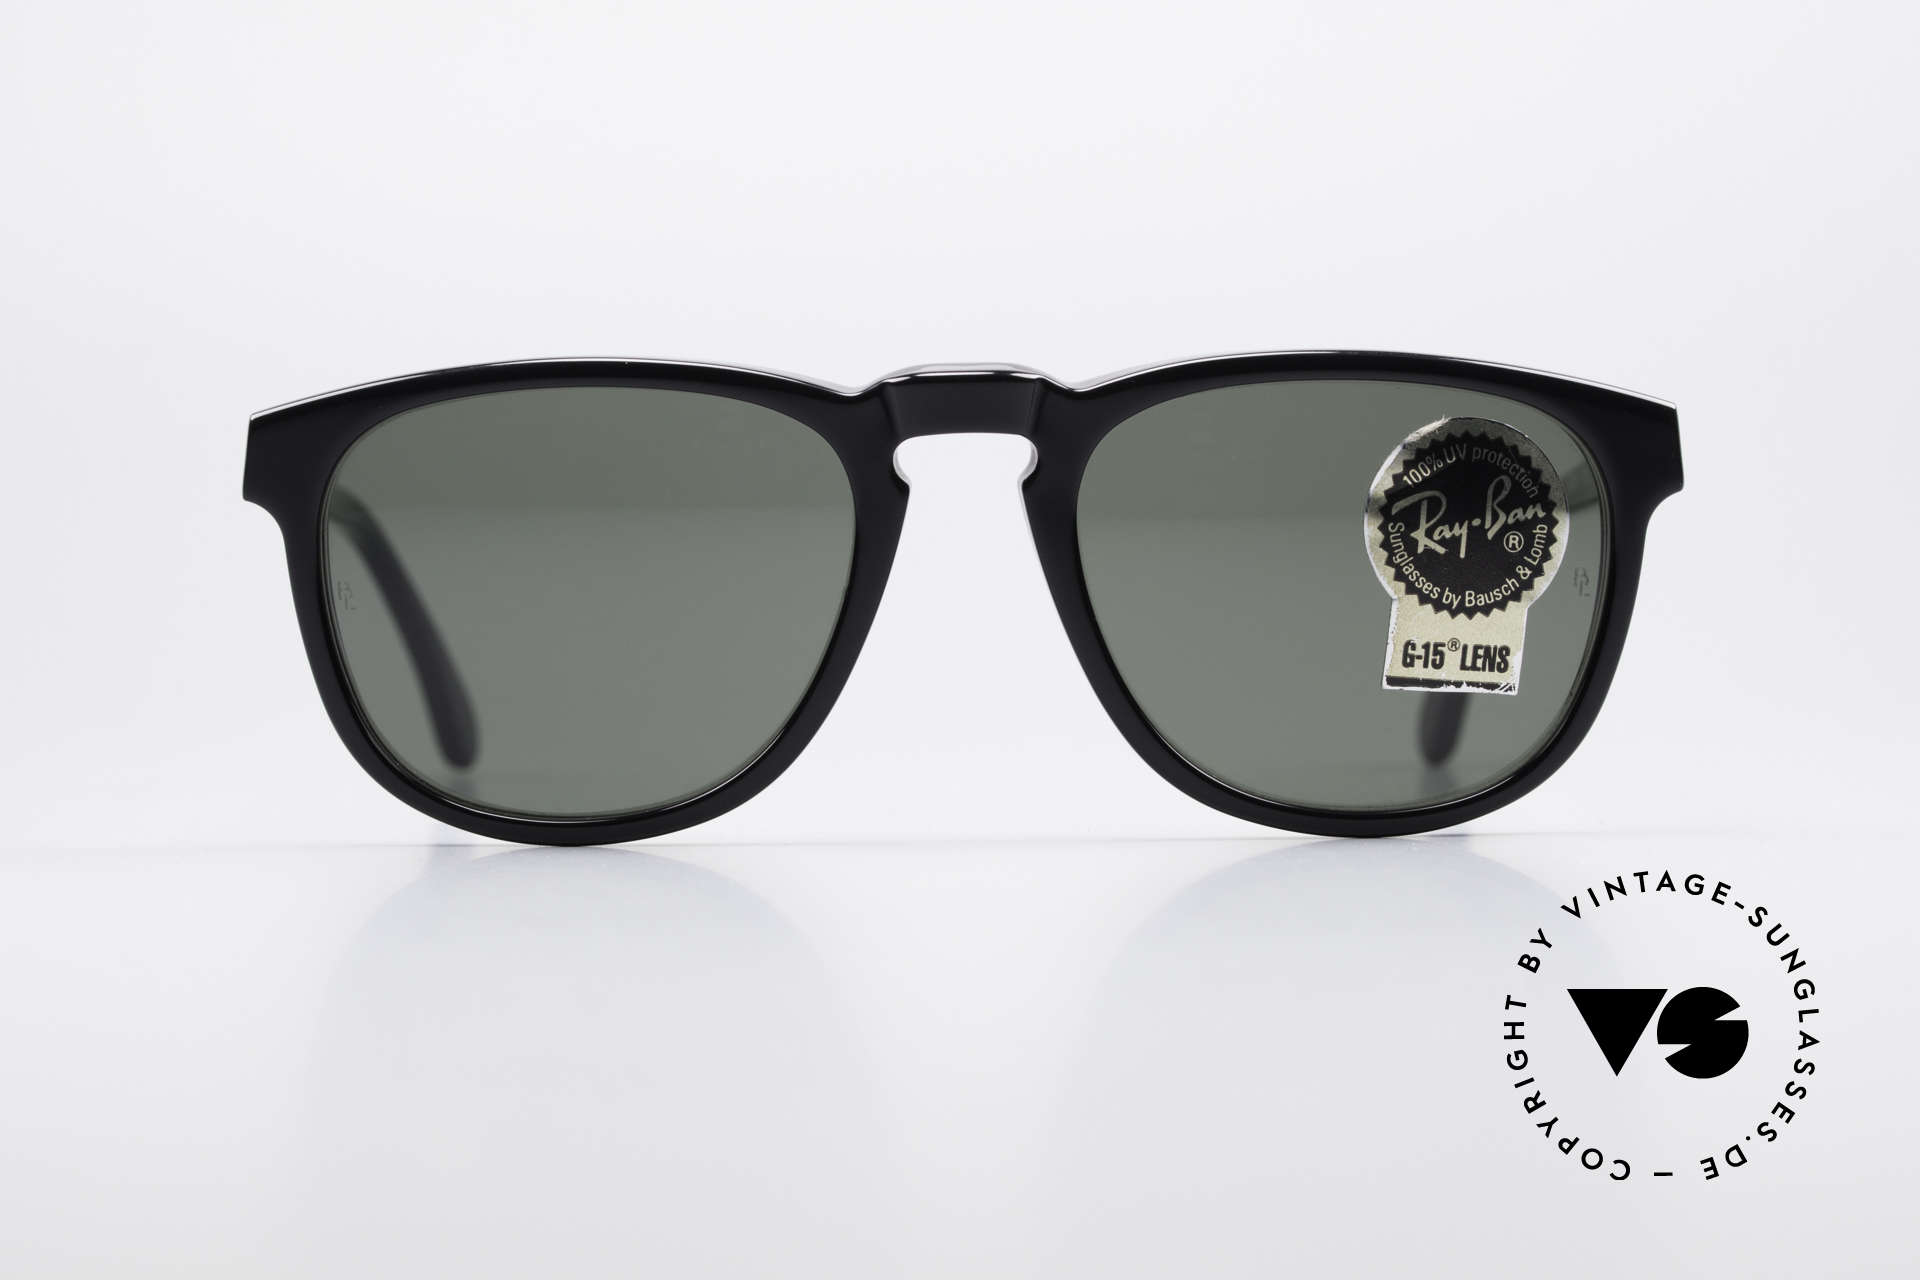 Sunglasses Ray Ban Gatsby Style 2 Old Ray Ban USA Sunglasses